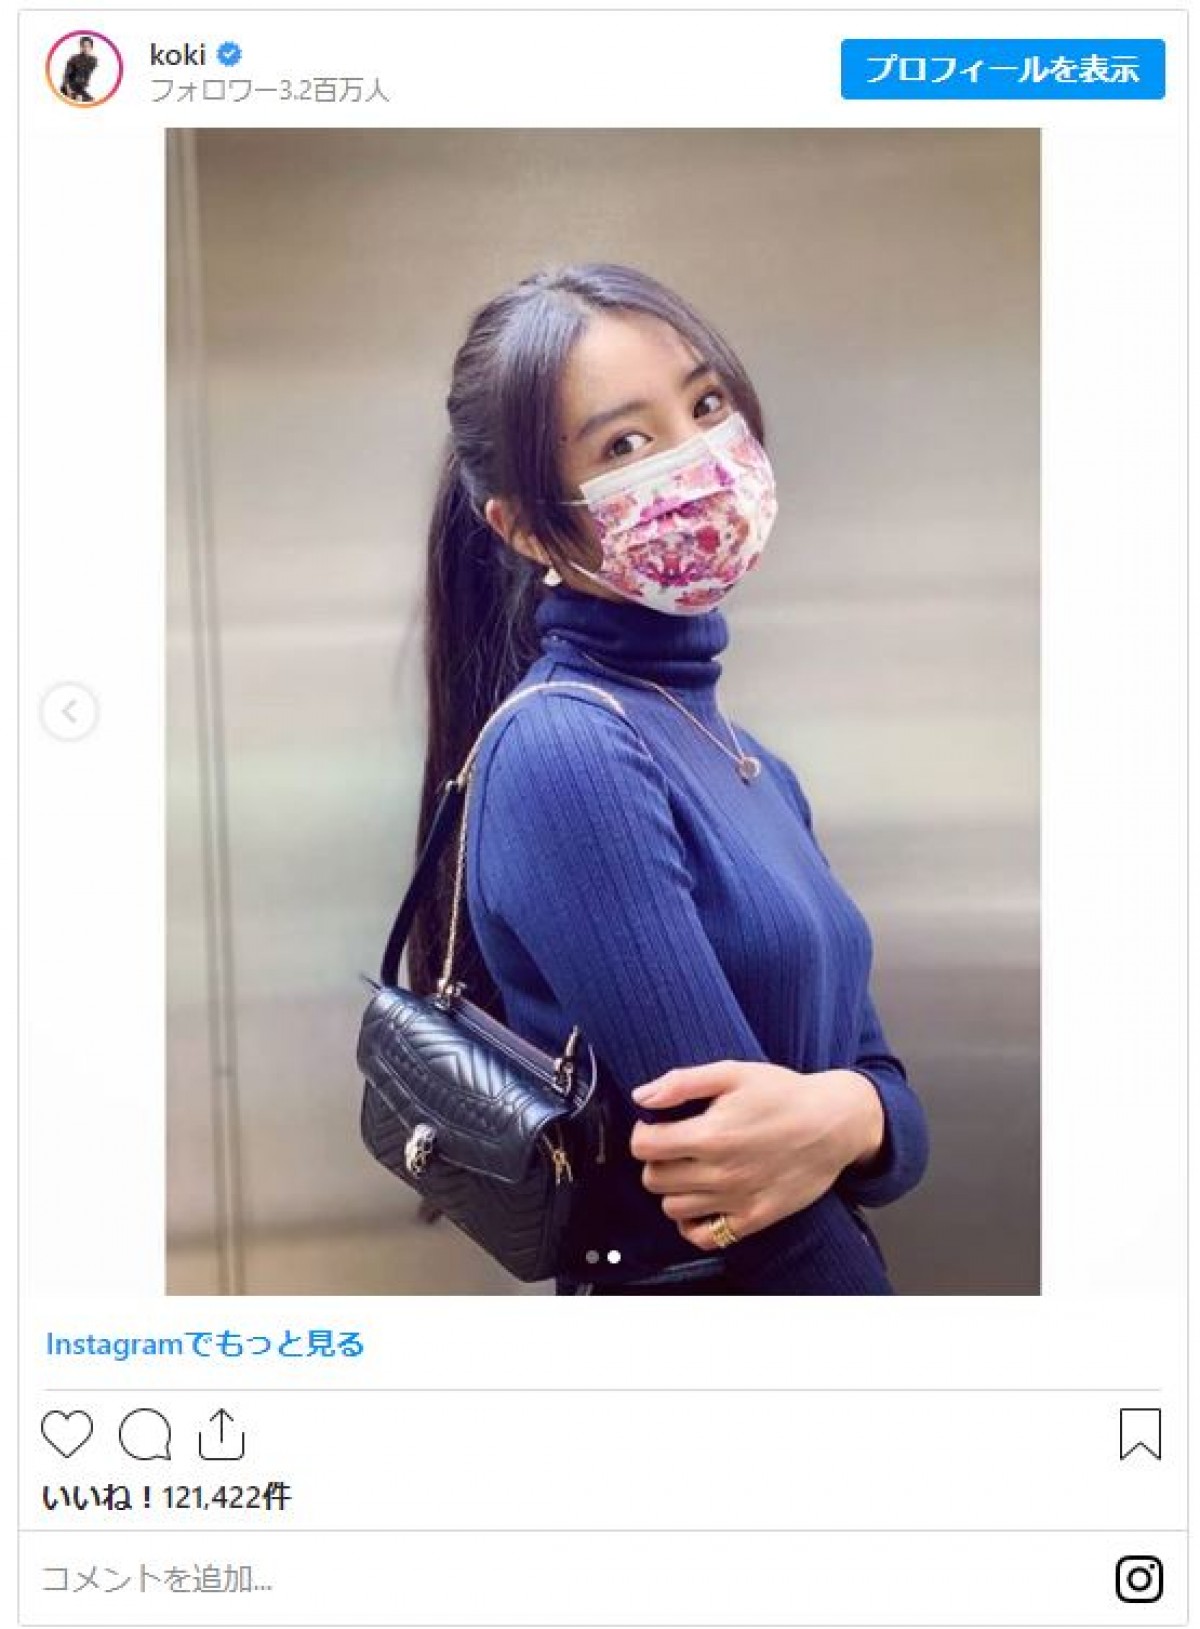 Koki，17歳、 美しさ隠せないマスク姿を公開